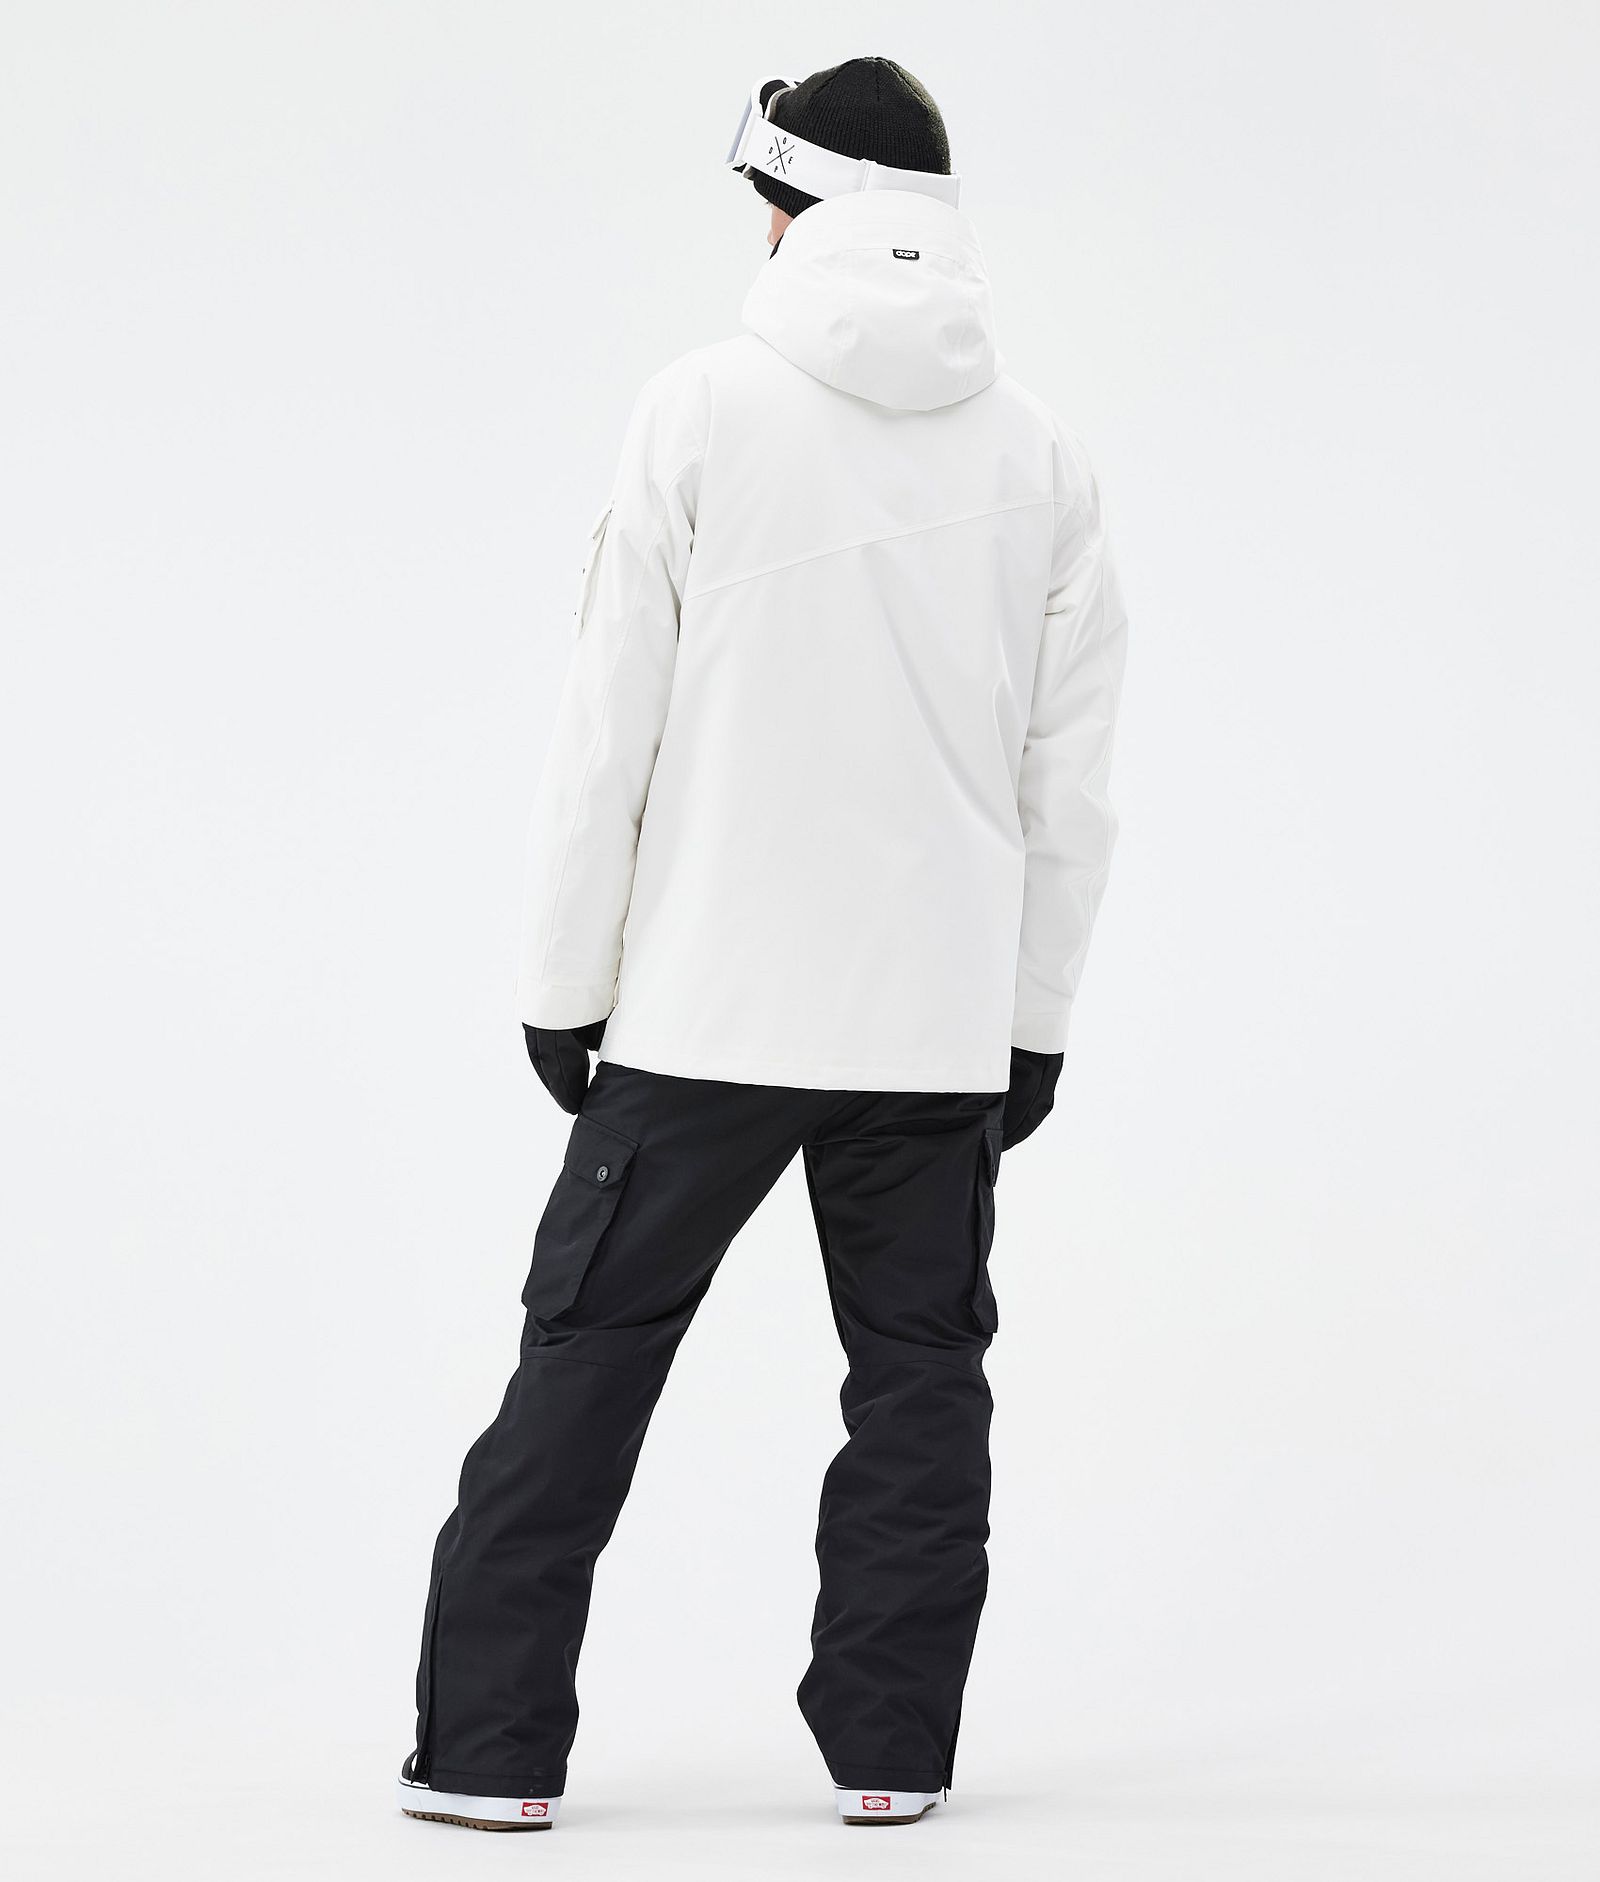 Adept Outfit de Snowboard Hombre Old White/Blackout